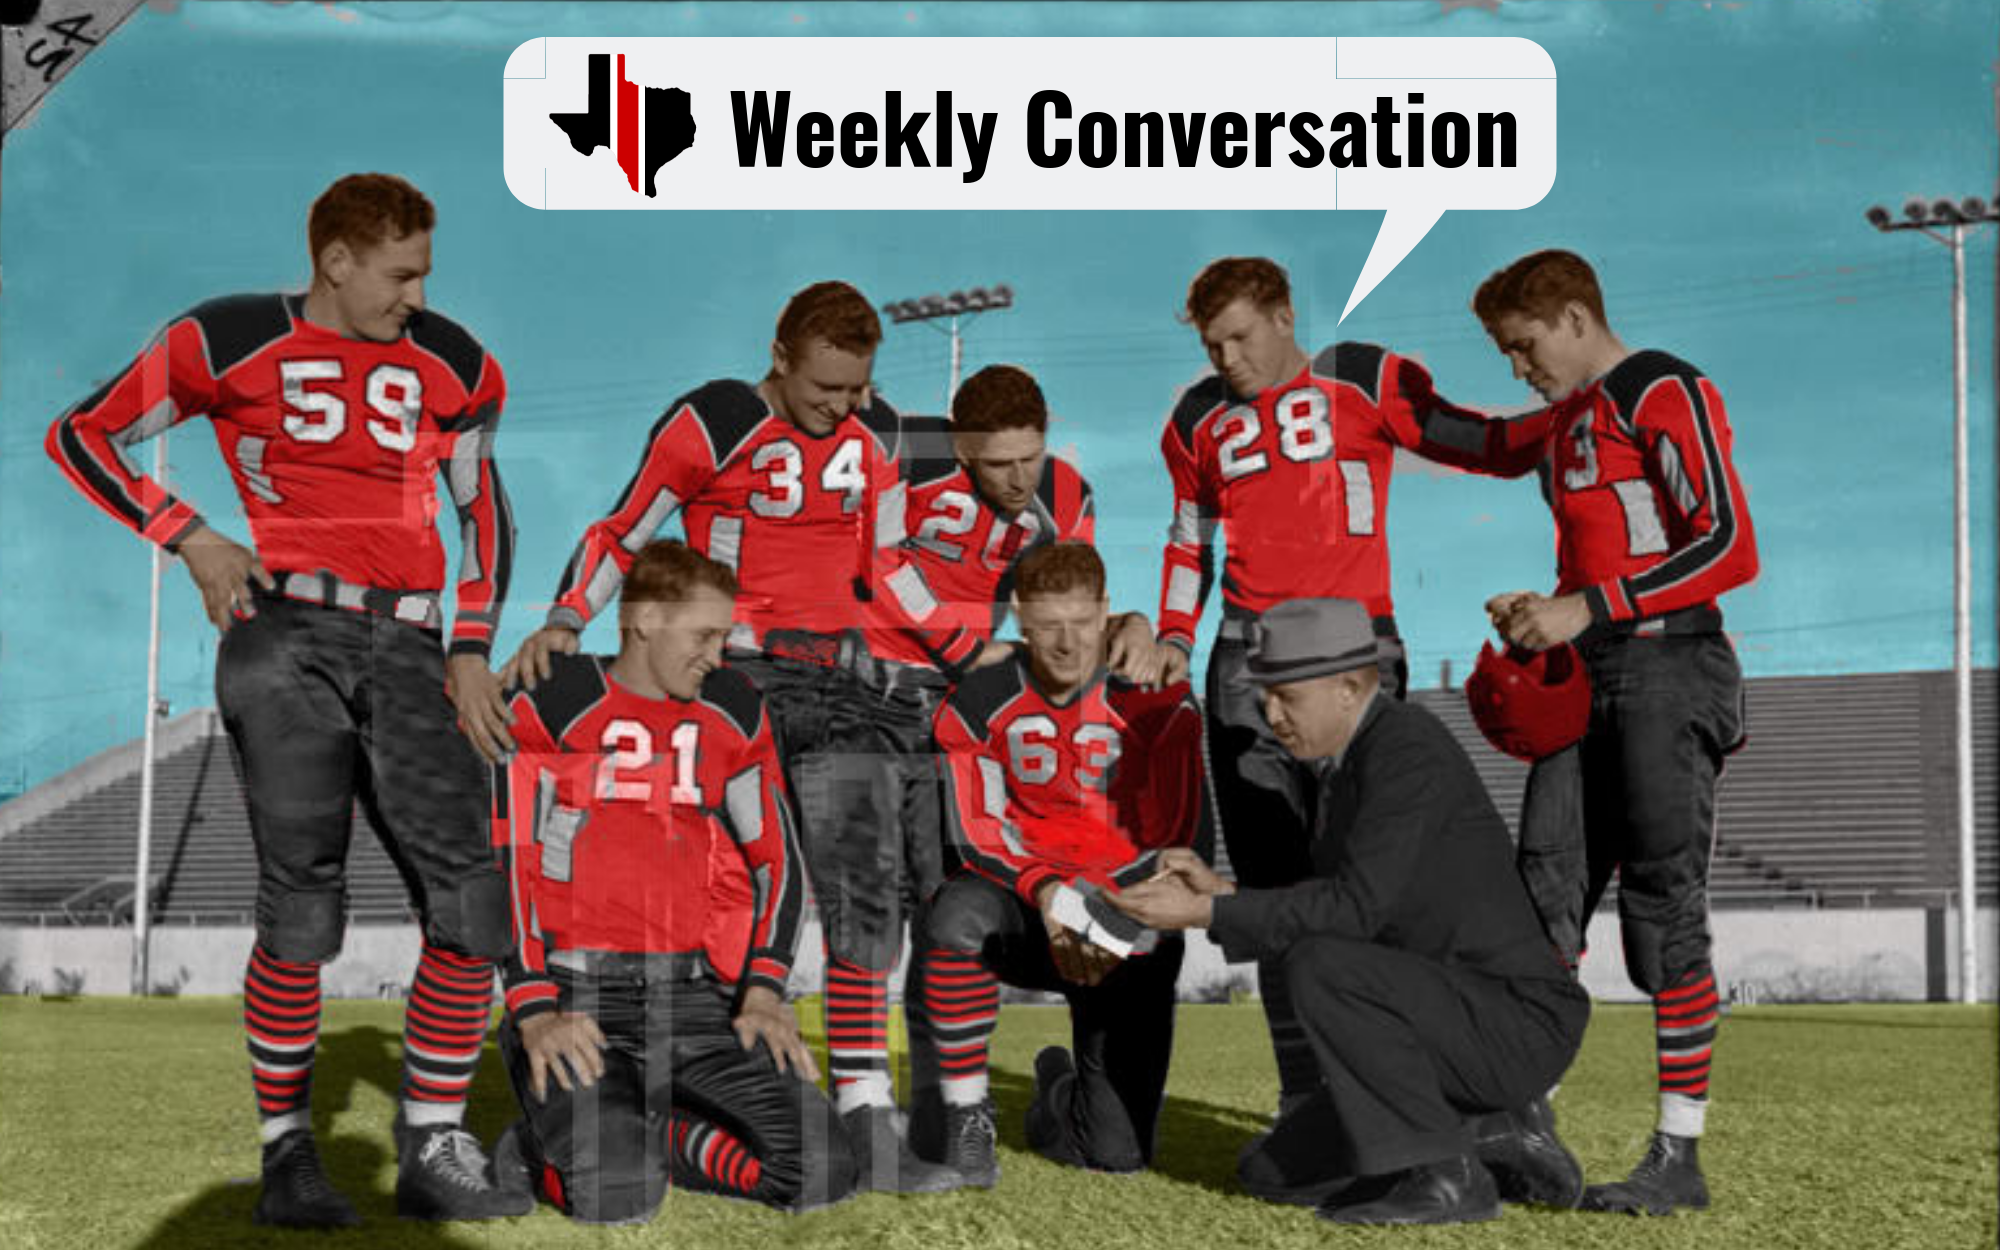 Weekly Conversation: Pretty Good Little Community